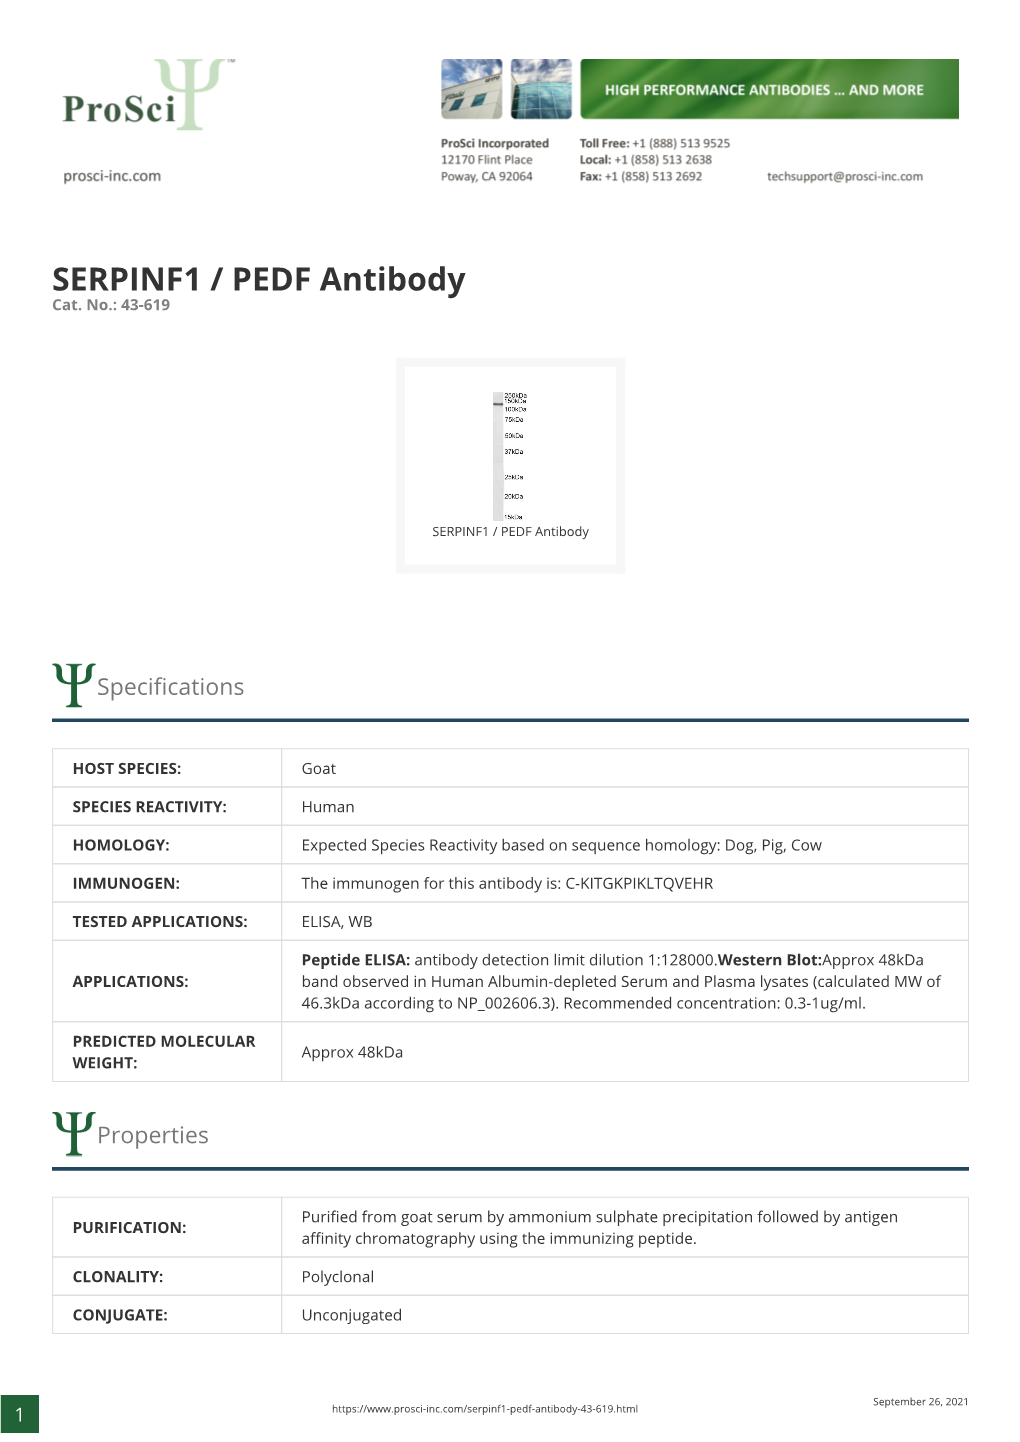 SERPINF1 / PEDF Antibody Cat